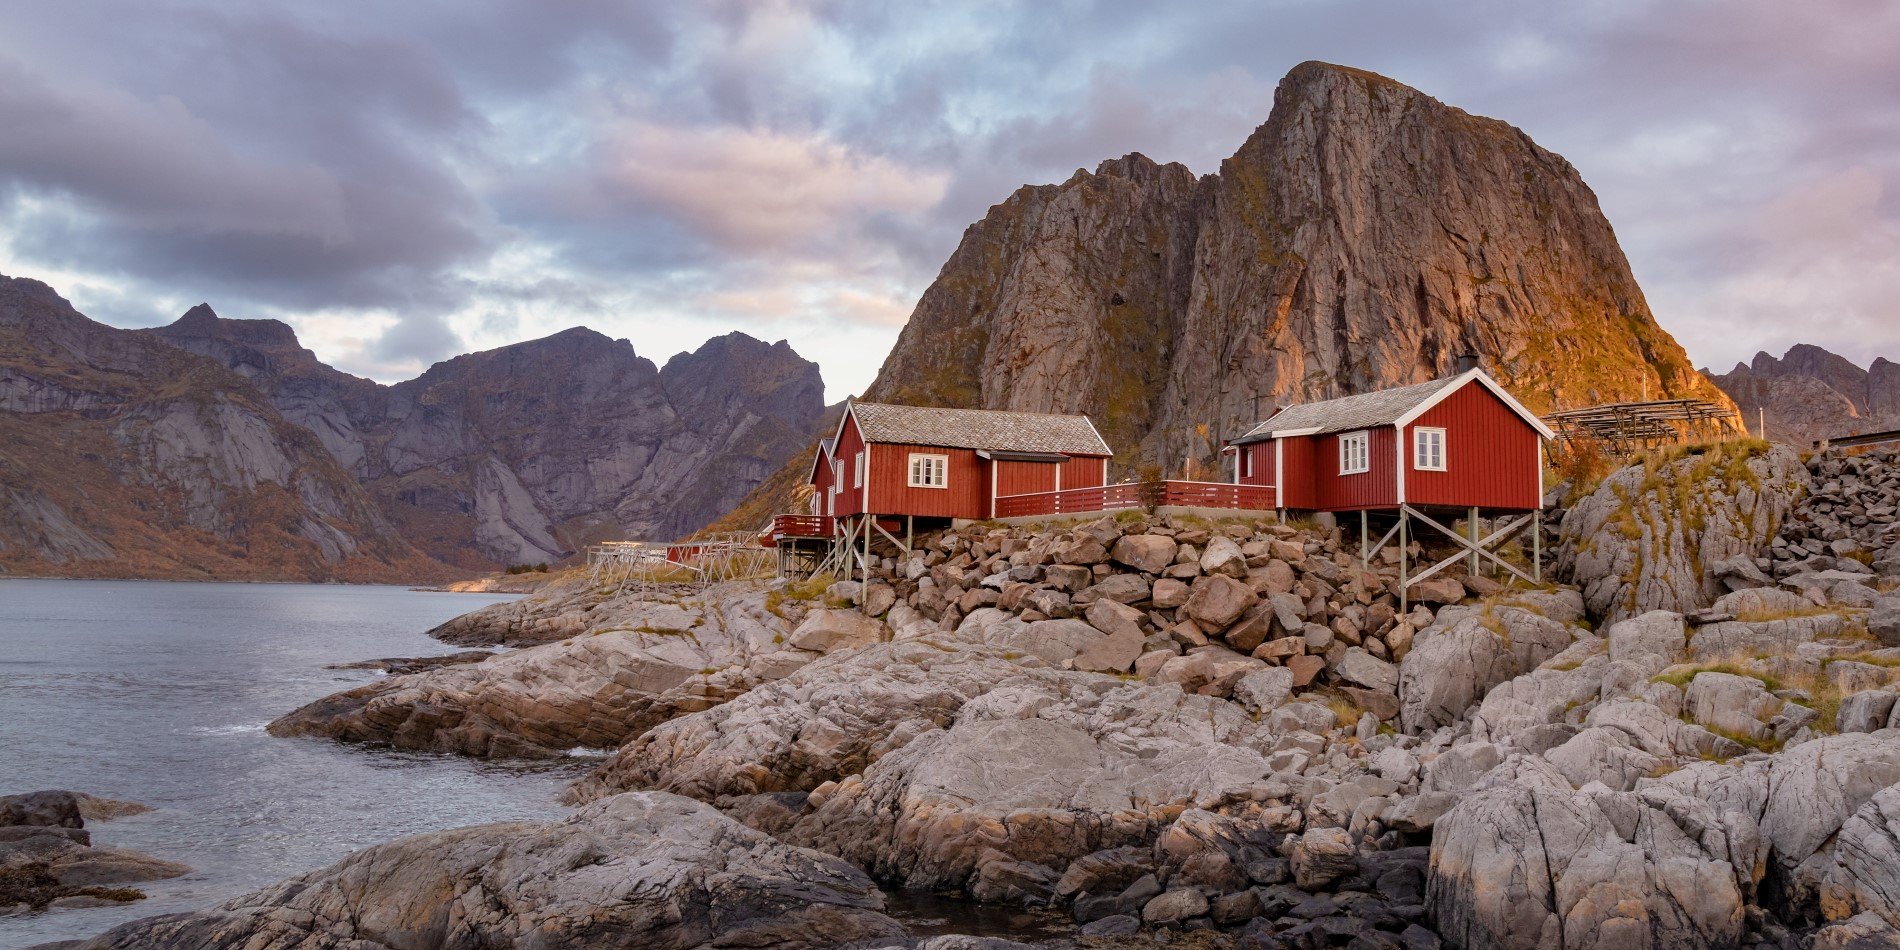 Red Norwegian cabins on the peer